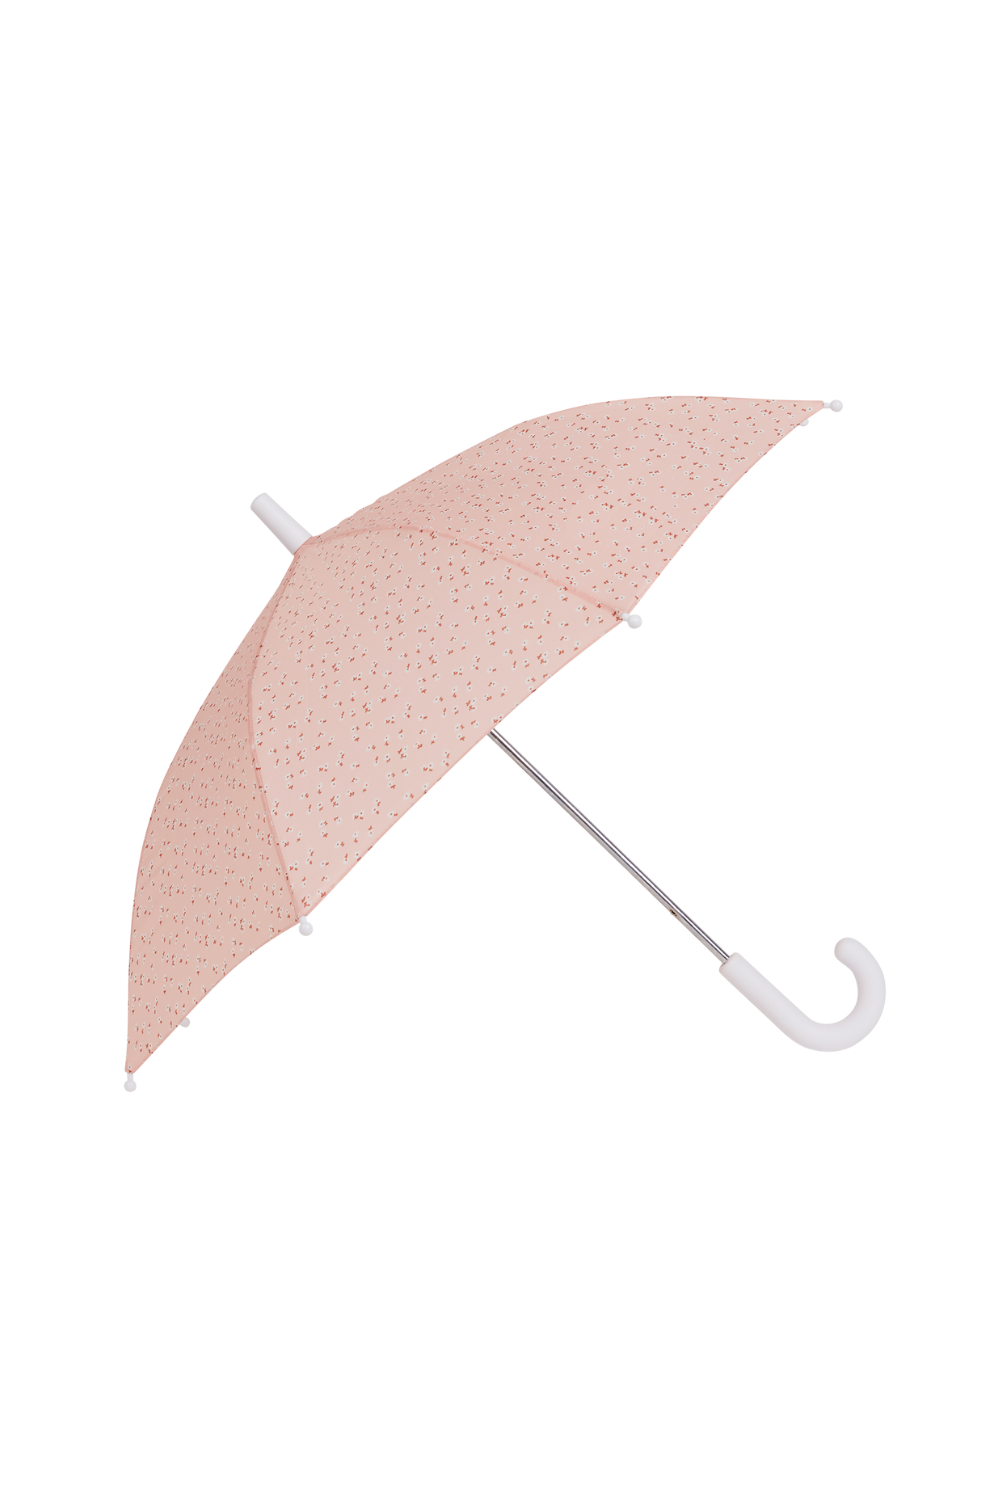 Olli Ella See-Ya Umbrella - Pink Daisies